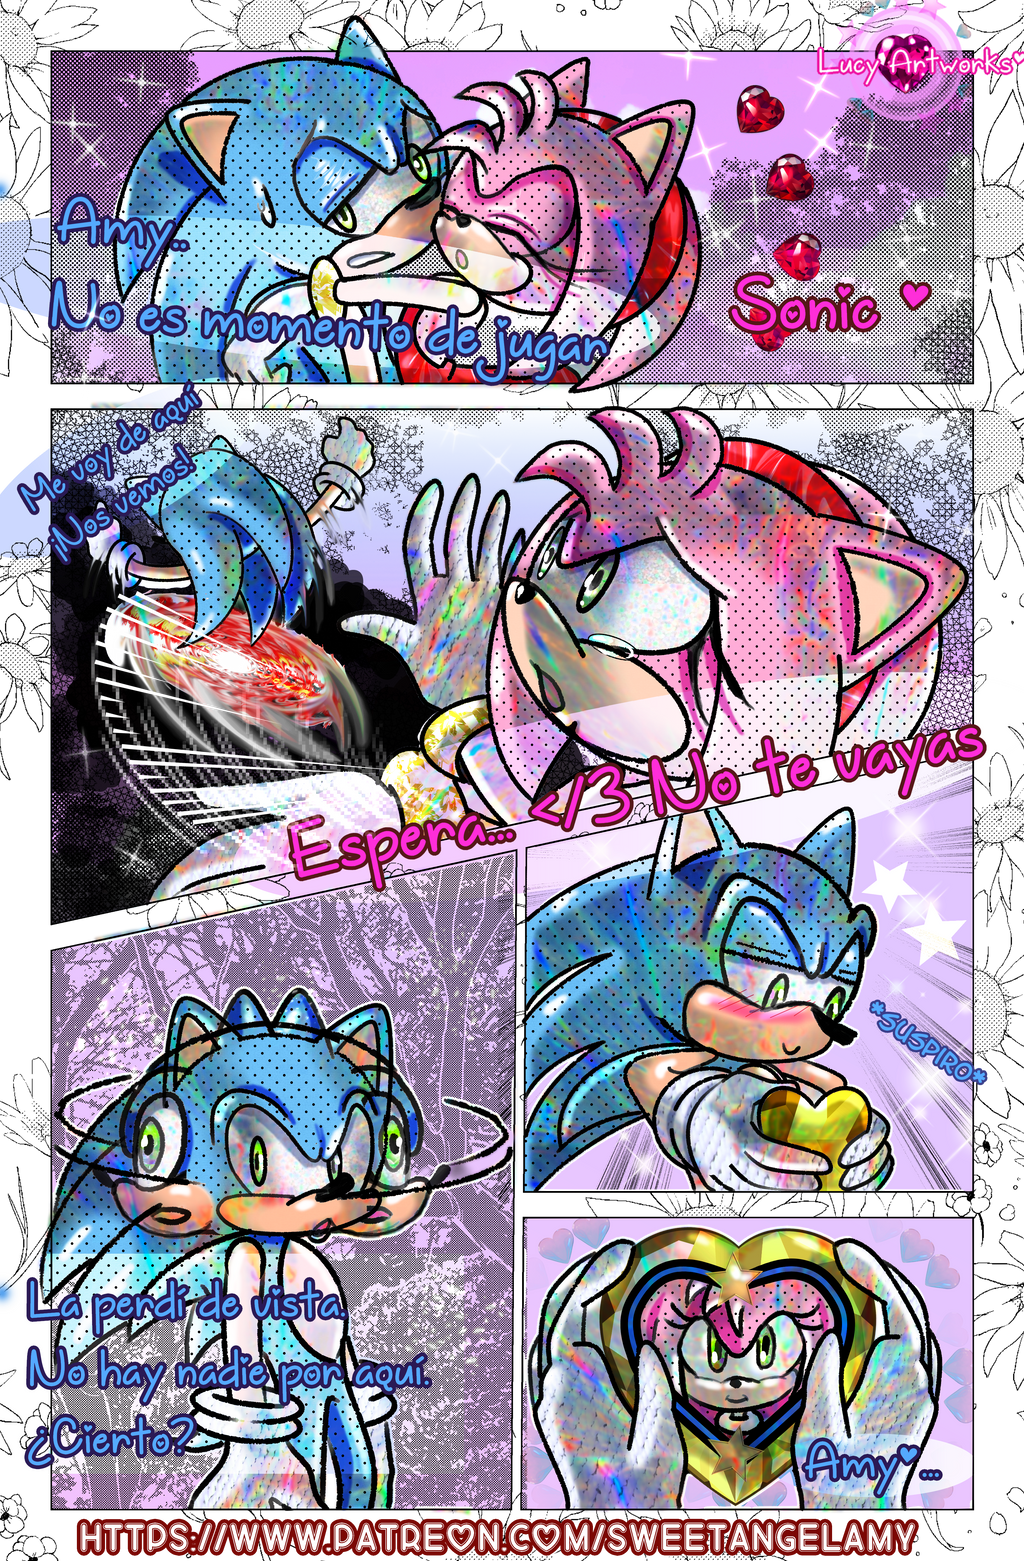 Amy-Shadow-Sonic SB by RAVRGEMY on DeviantArt